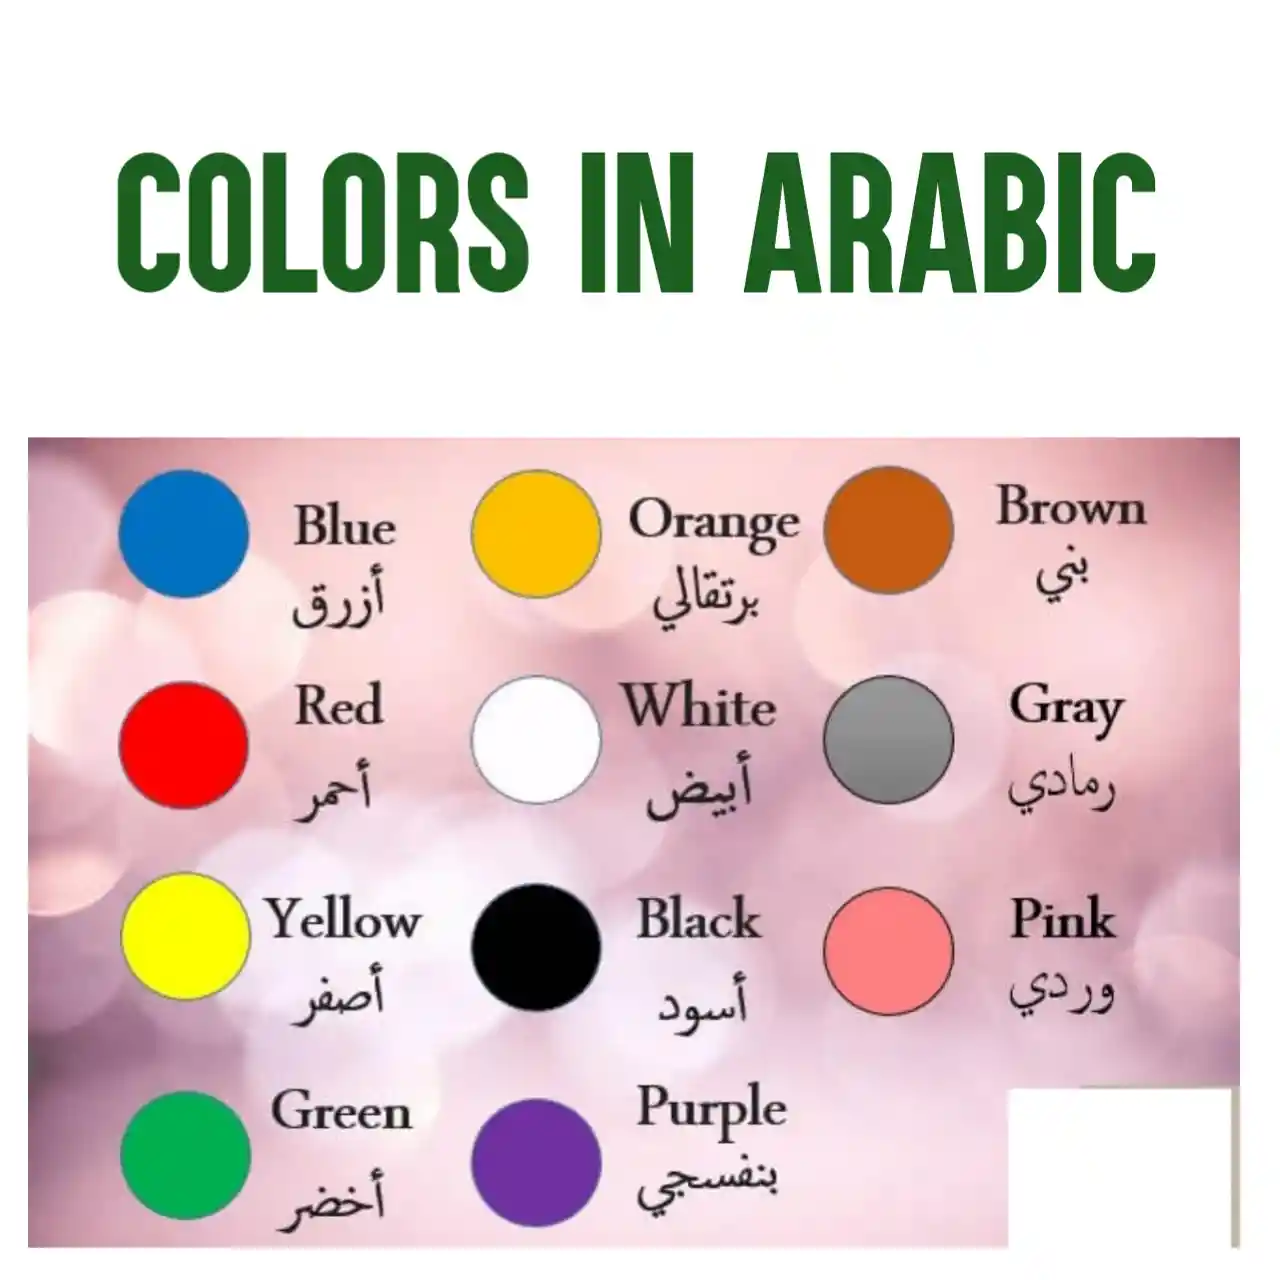 Colors In Arabic